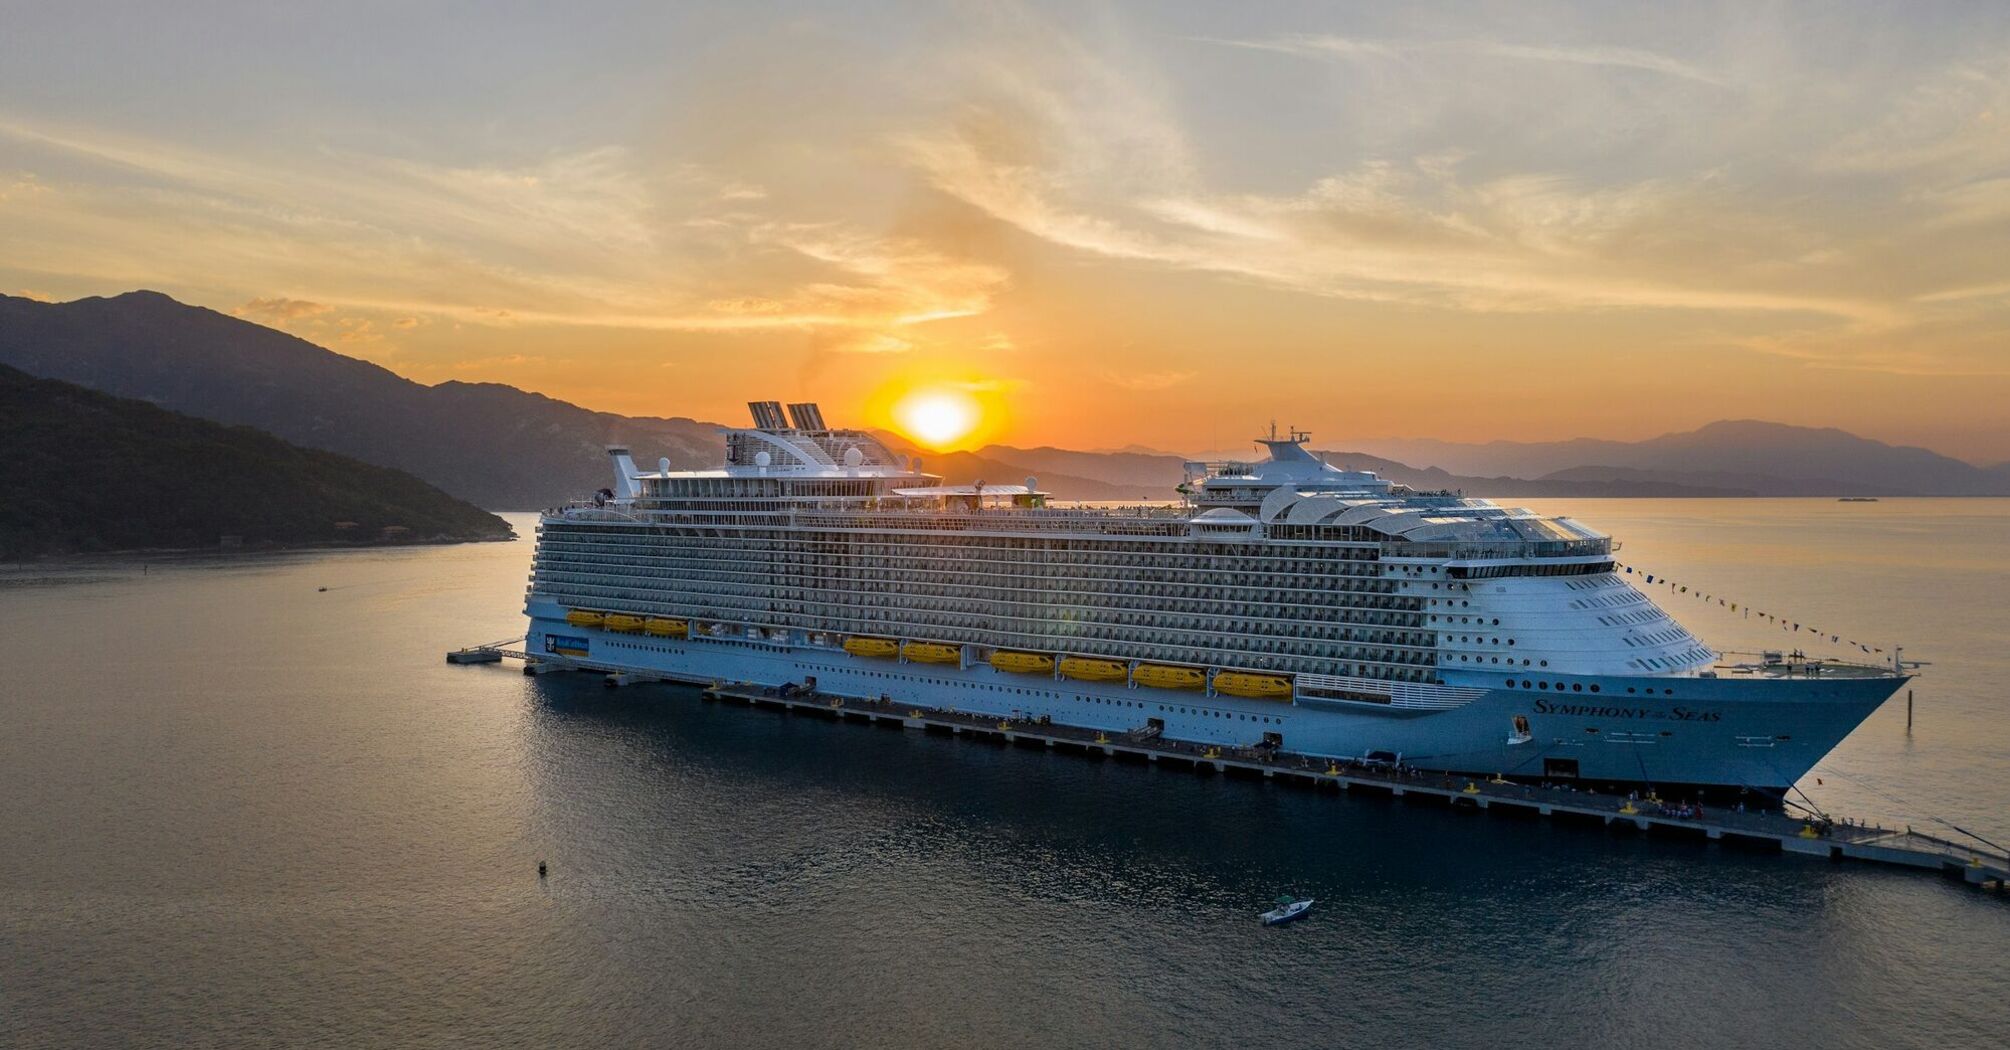 Royal Caribbean cruise ship in the bay